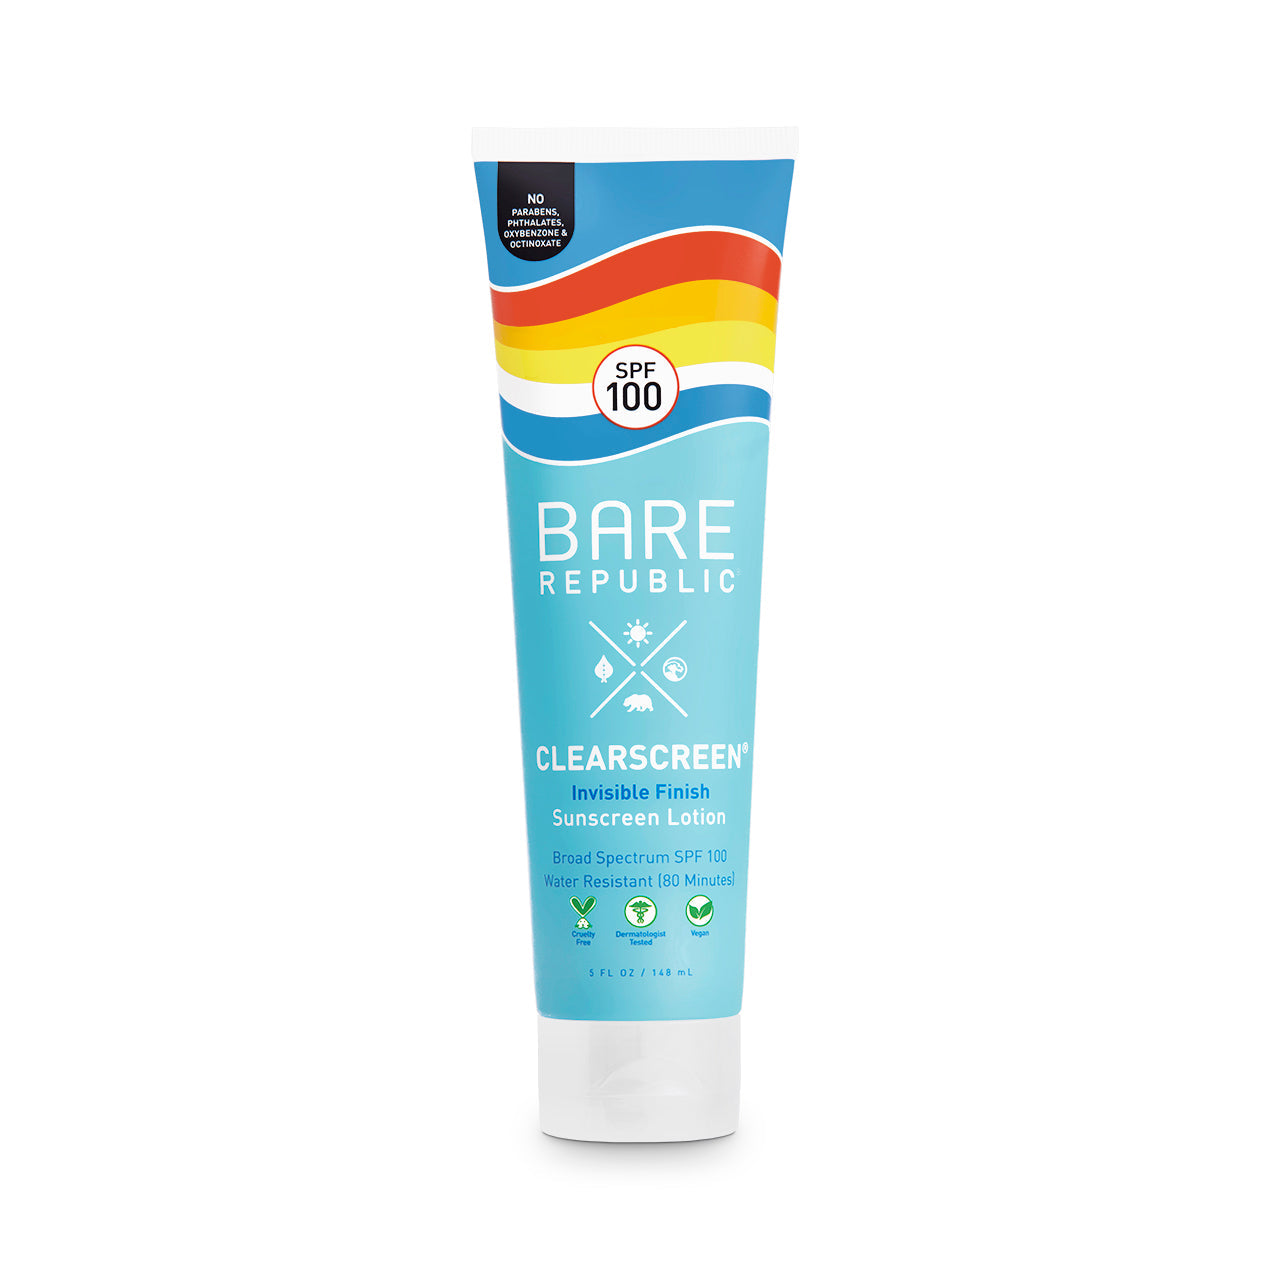 Clearscreen® SPF 100 Sunscreen Body Lotion